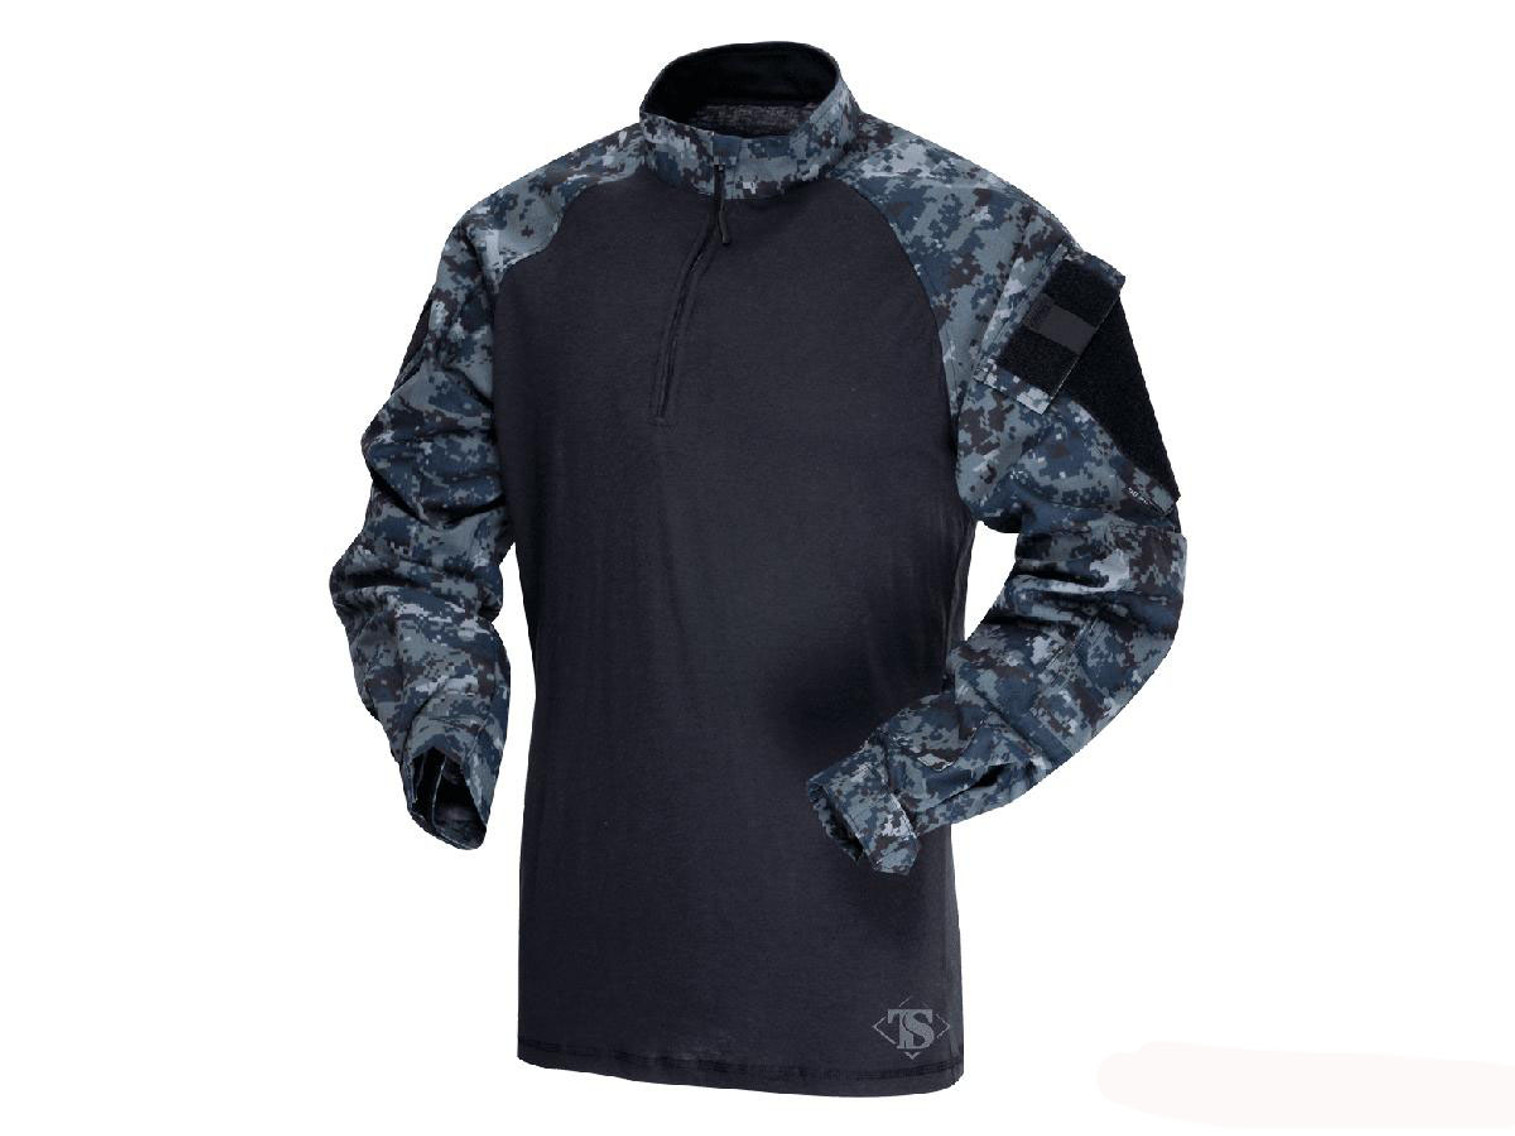 Tru-Spec Tactical Response Uniform 1/4 Zip Combat Shirt - Midnight Digital (Size: Medium)